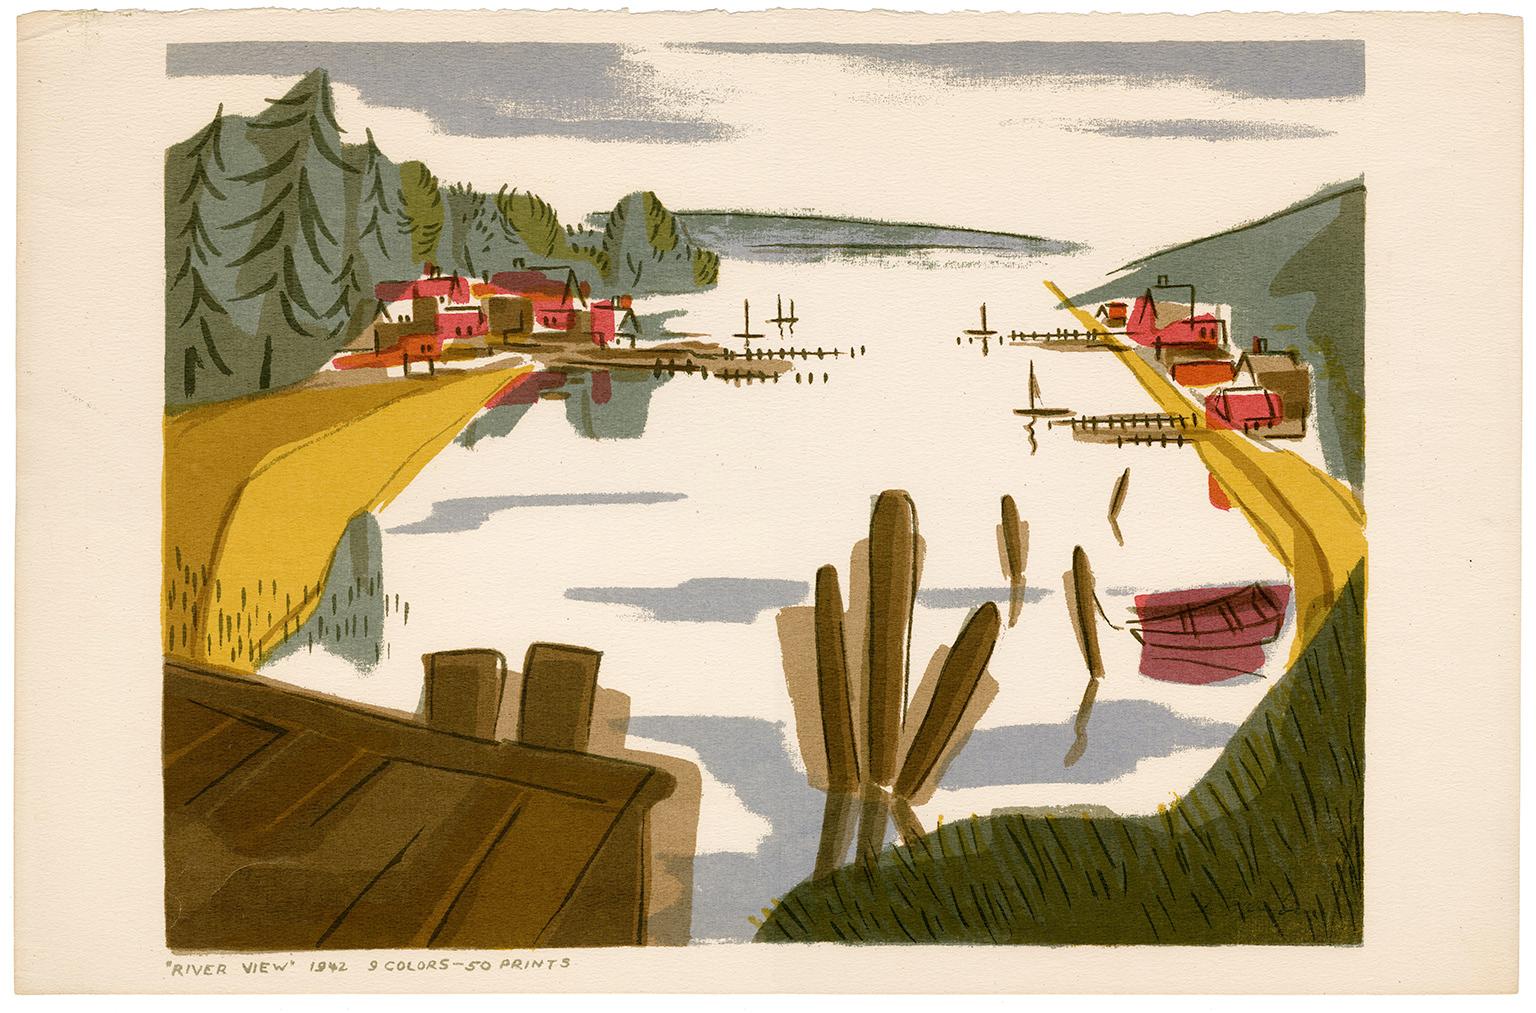 'River View' — 1940s American Modernism - Print by Edward August Landon